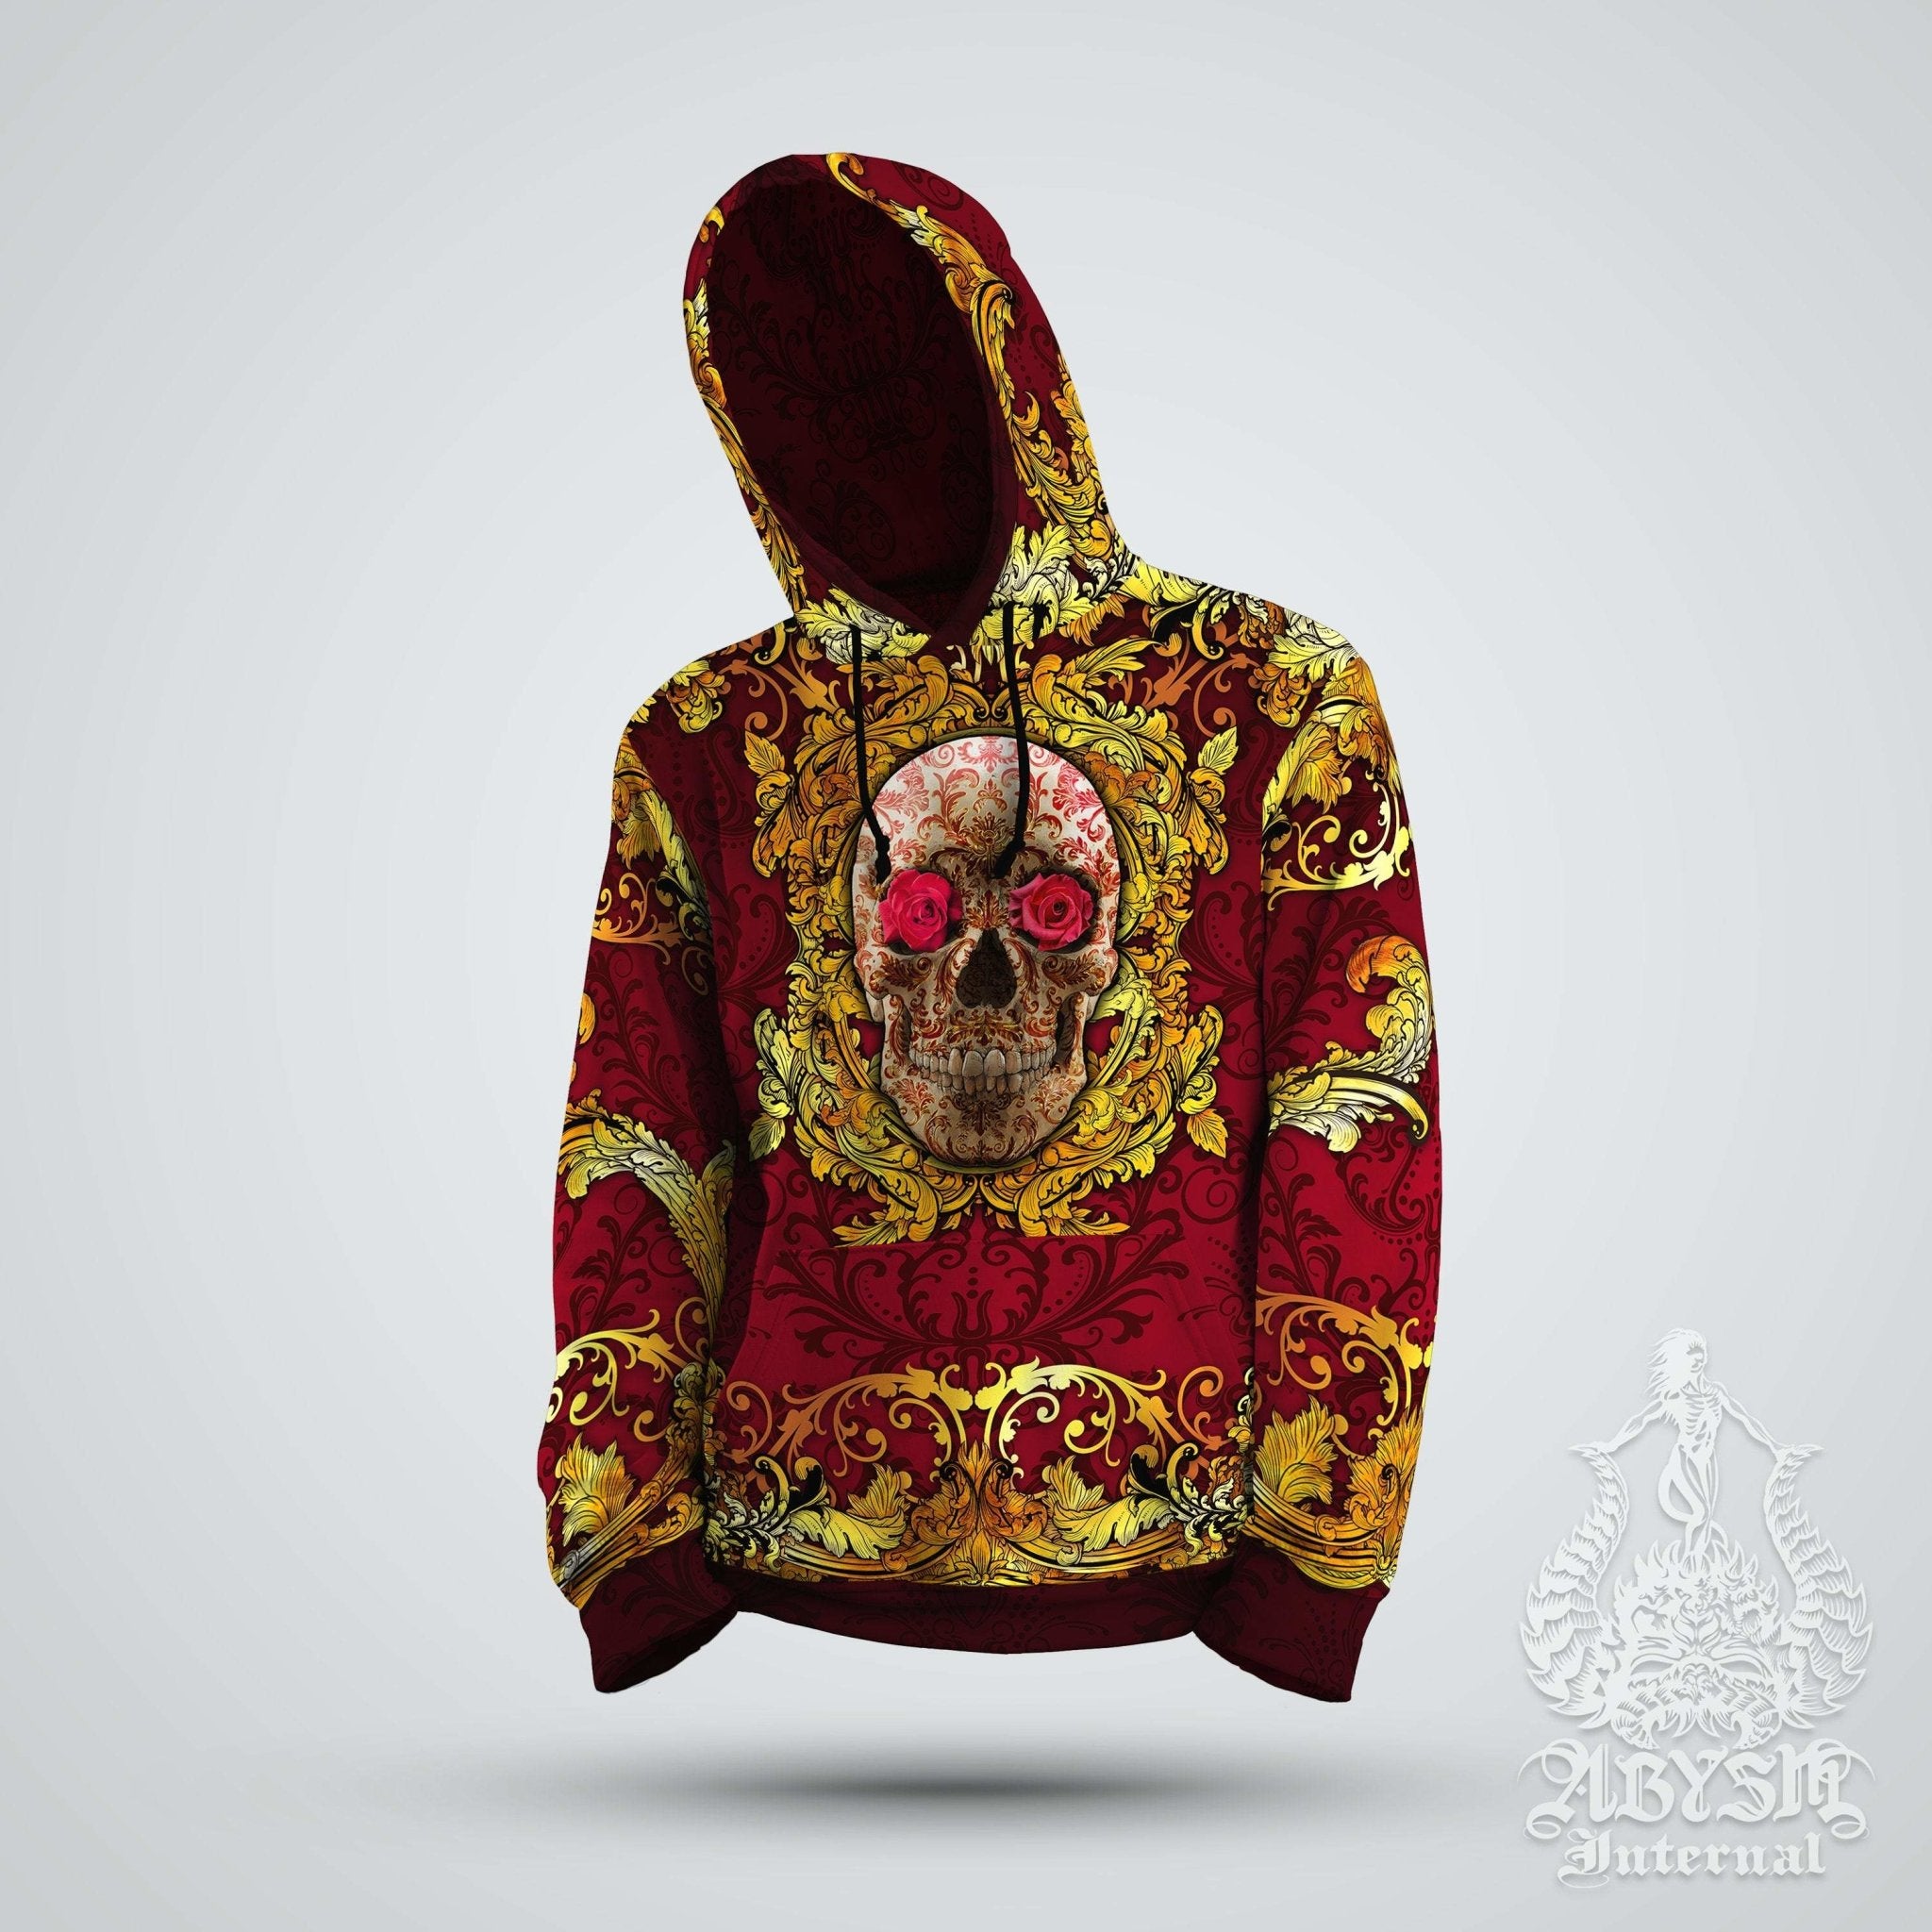 Skull Hoodie, Hip Hop Streetwear, Victorian, Graffiti Unisex - Gold and Red - Abysm Internal